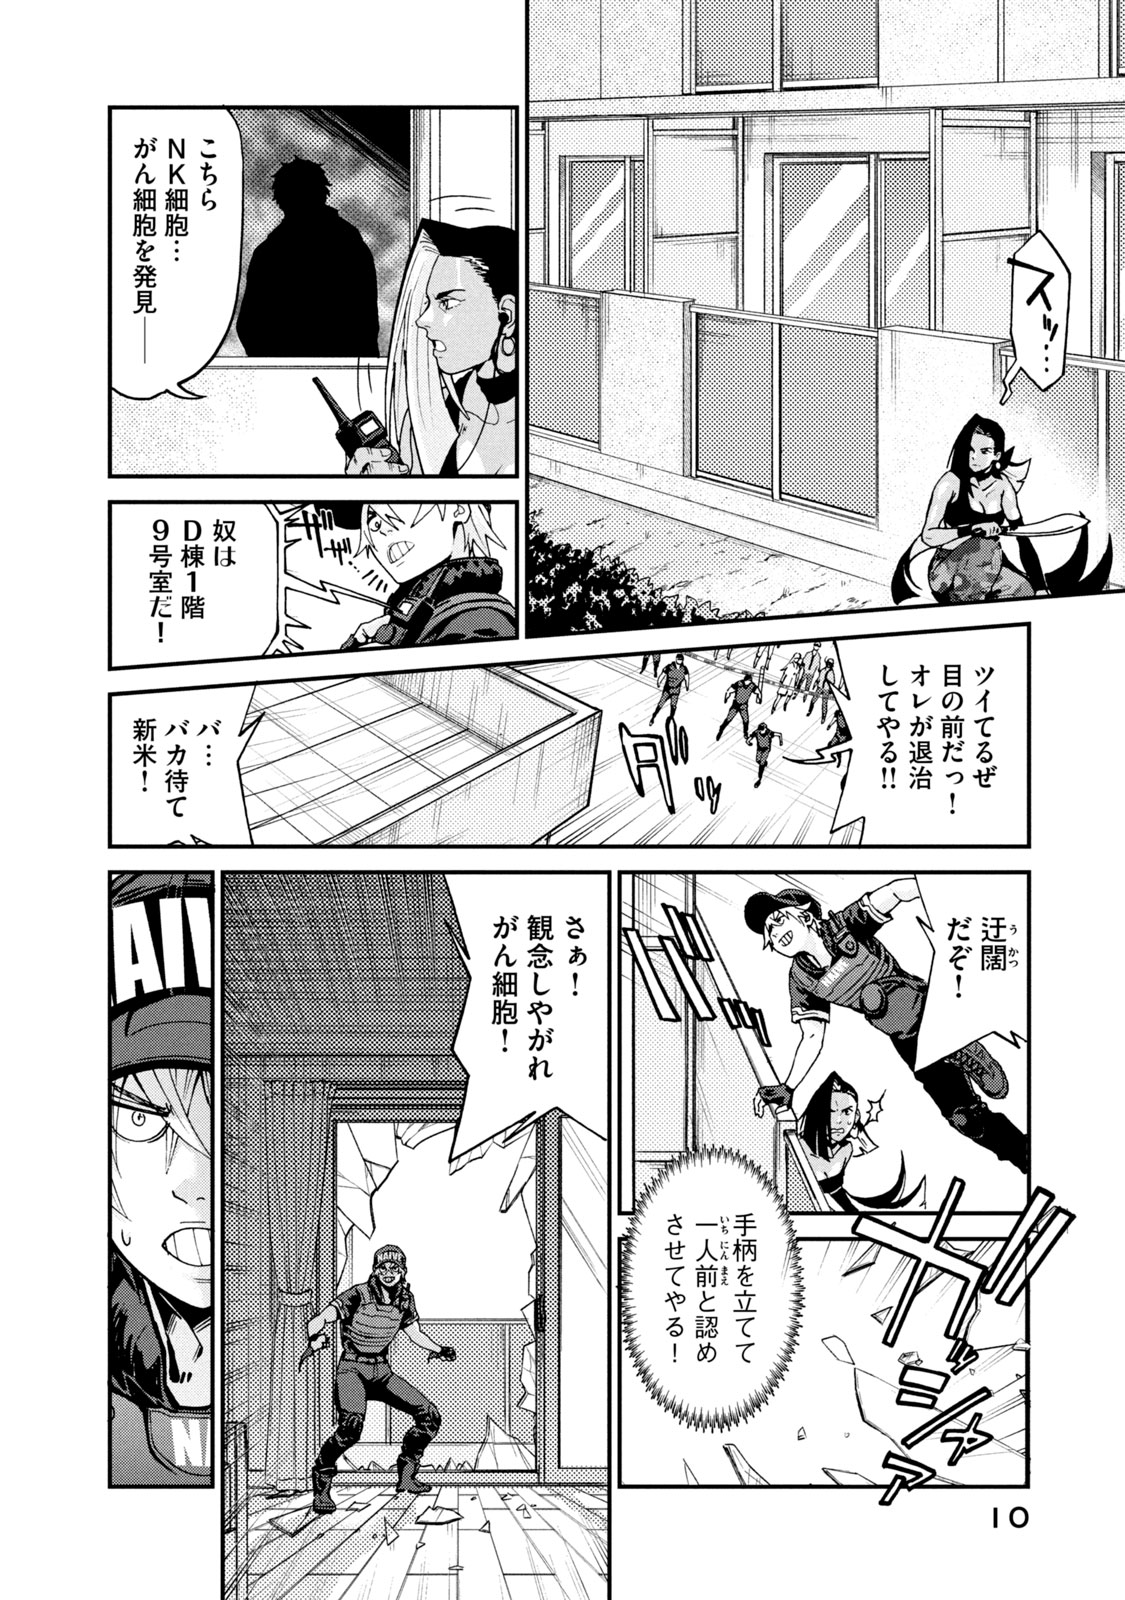 Hataraku Saibou BLACK - Chapter 37 - Page 12